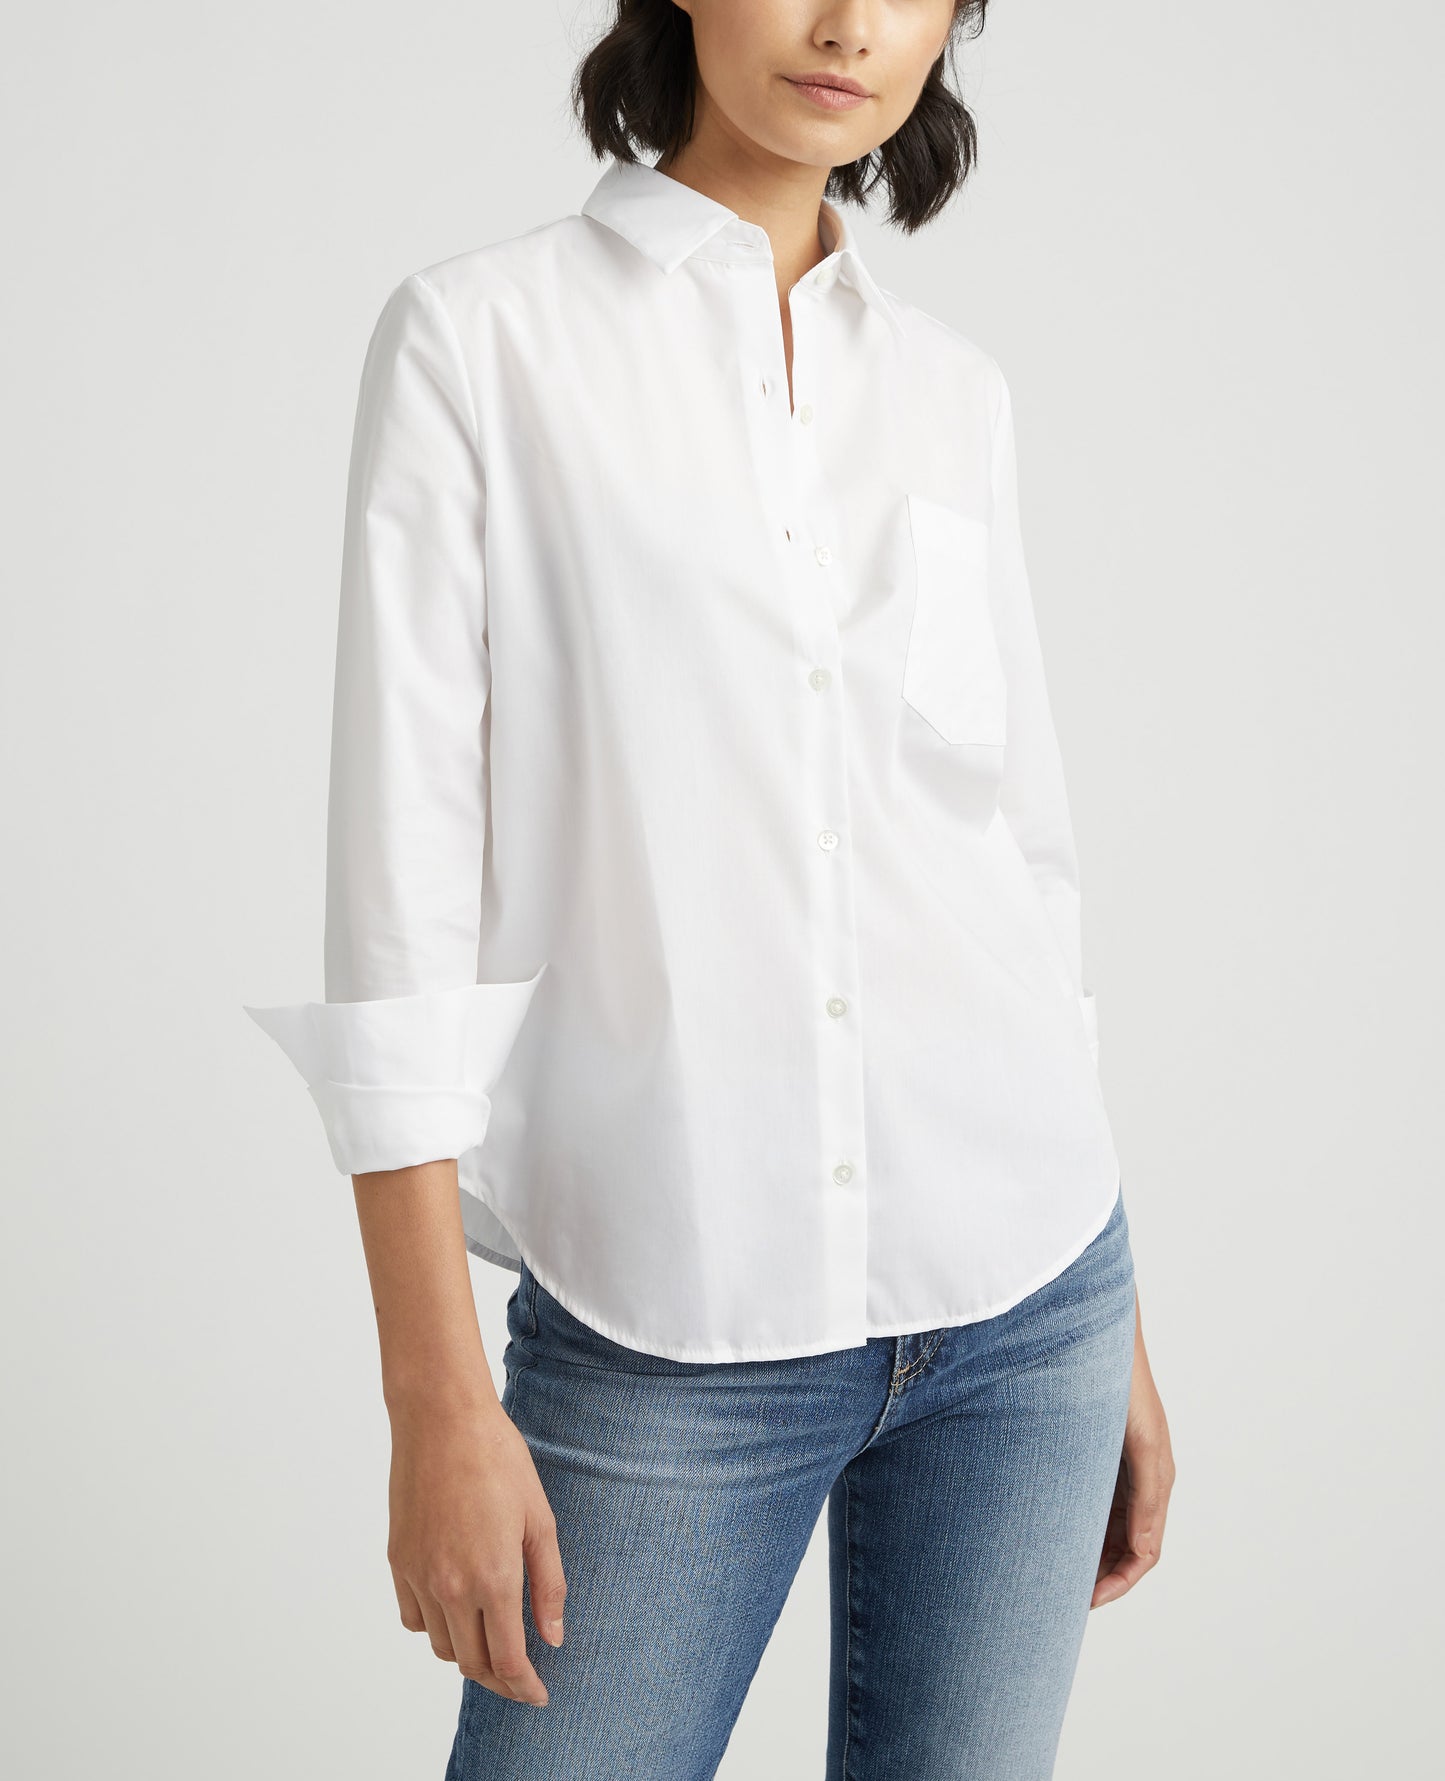 Cade Shirt True White Classic Button Up Shirt Women Tops Photo 6